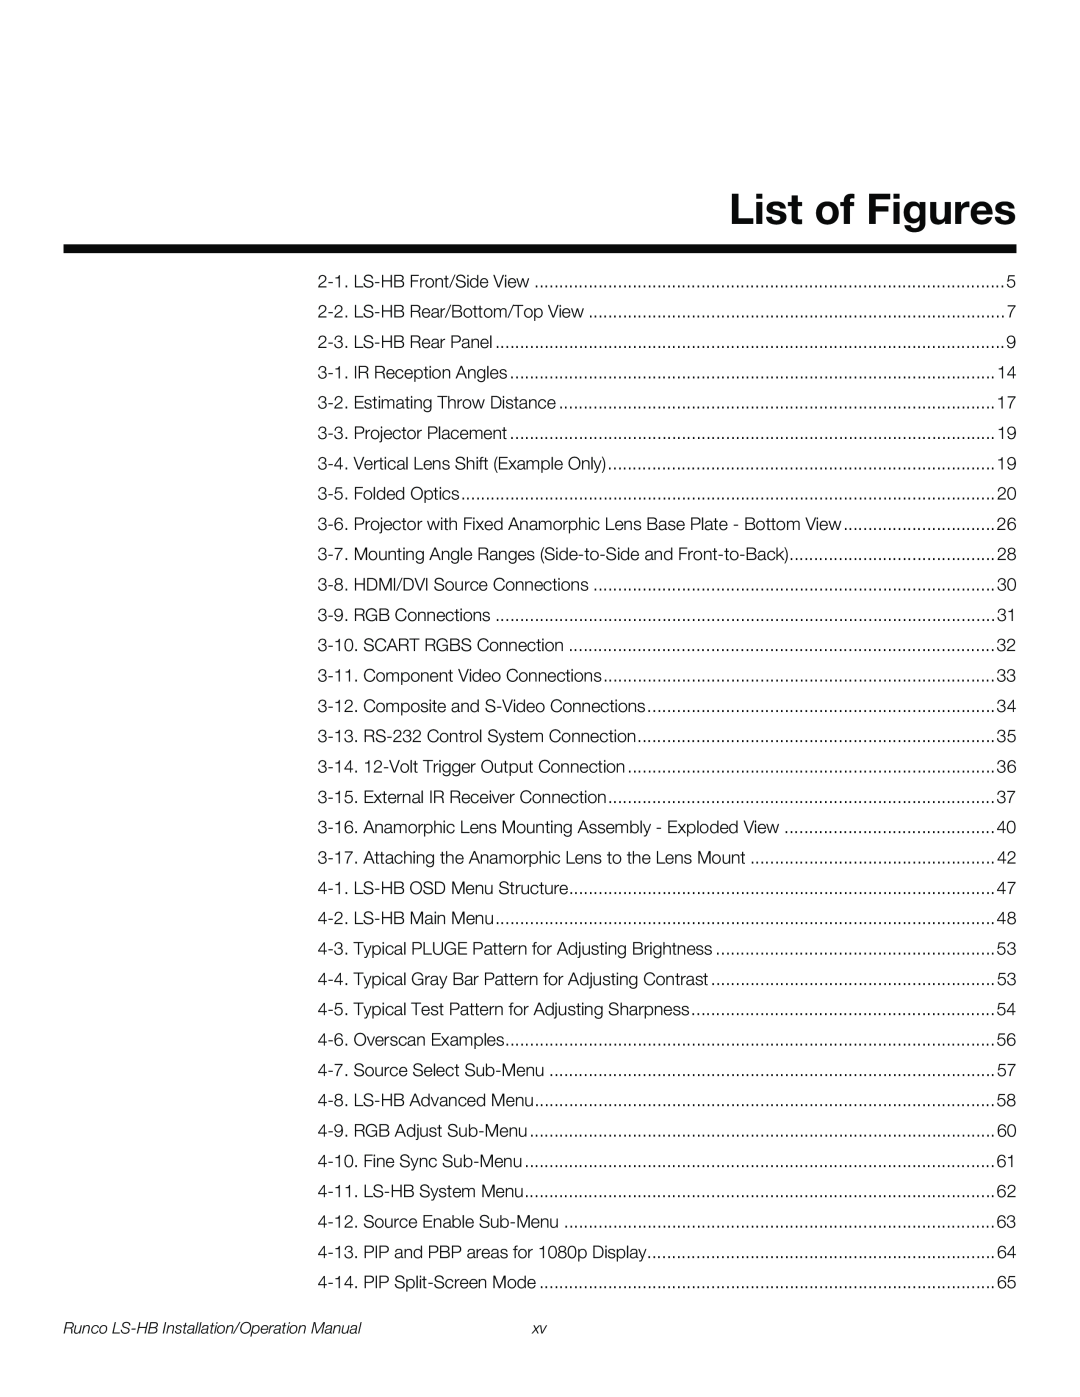 Runco operation manual List of Figures, Runco LS-HB Installation/Operation Manual 